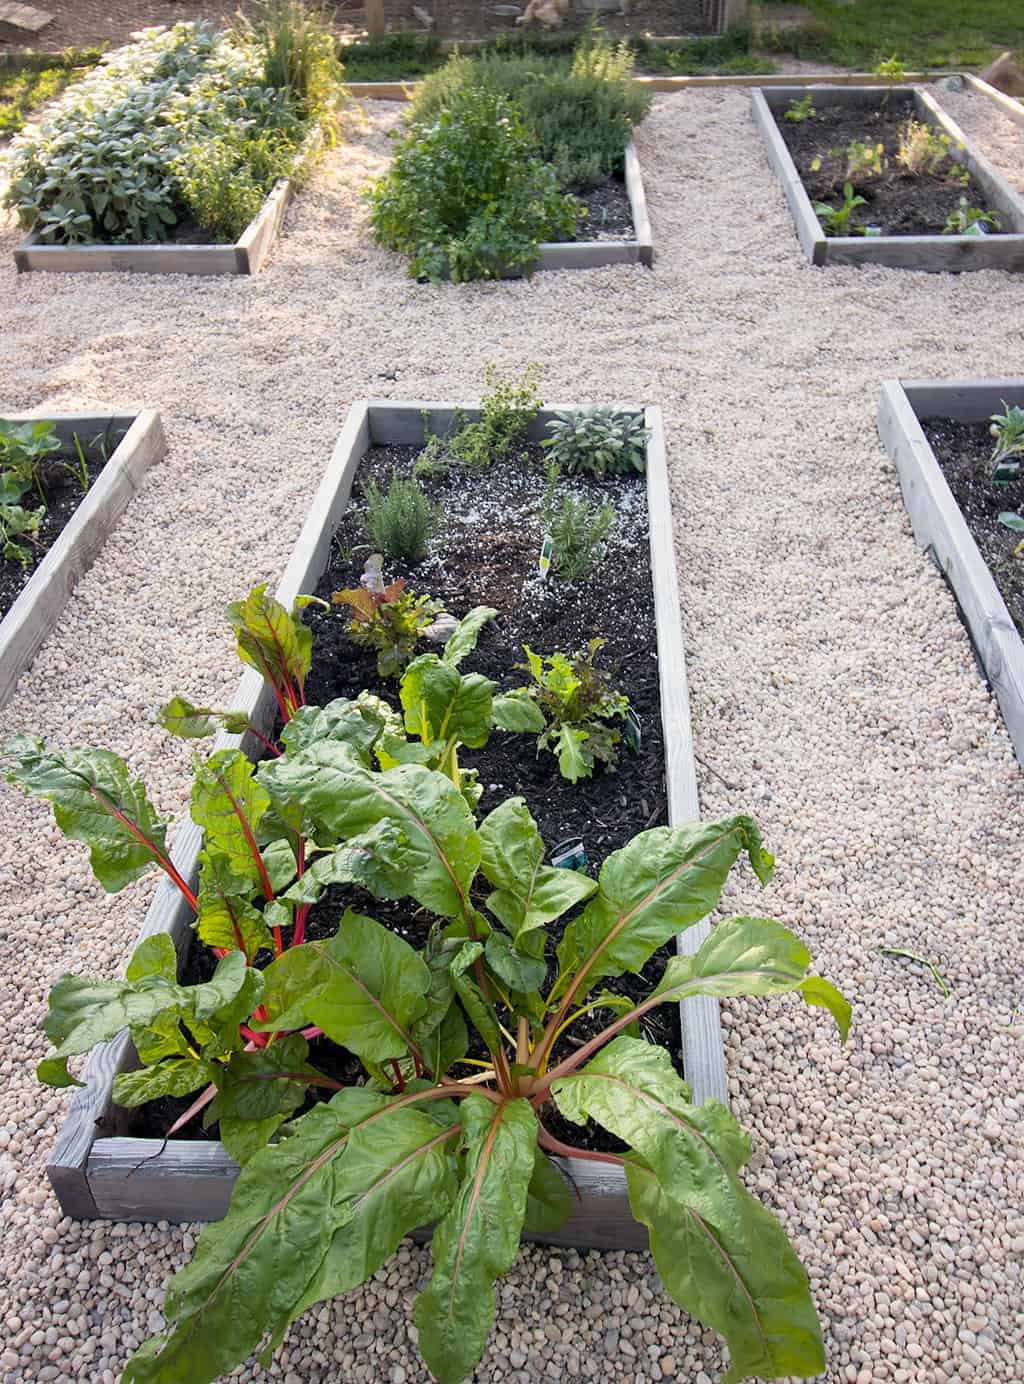 https://gina-michele.com/2019/08/20/raised-vegetable-garden-with-pea-gravel-diy/